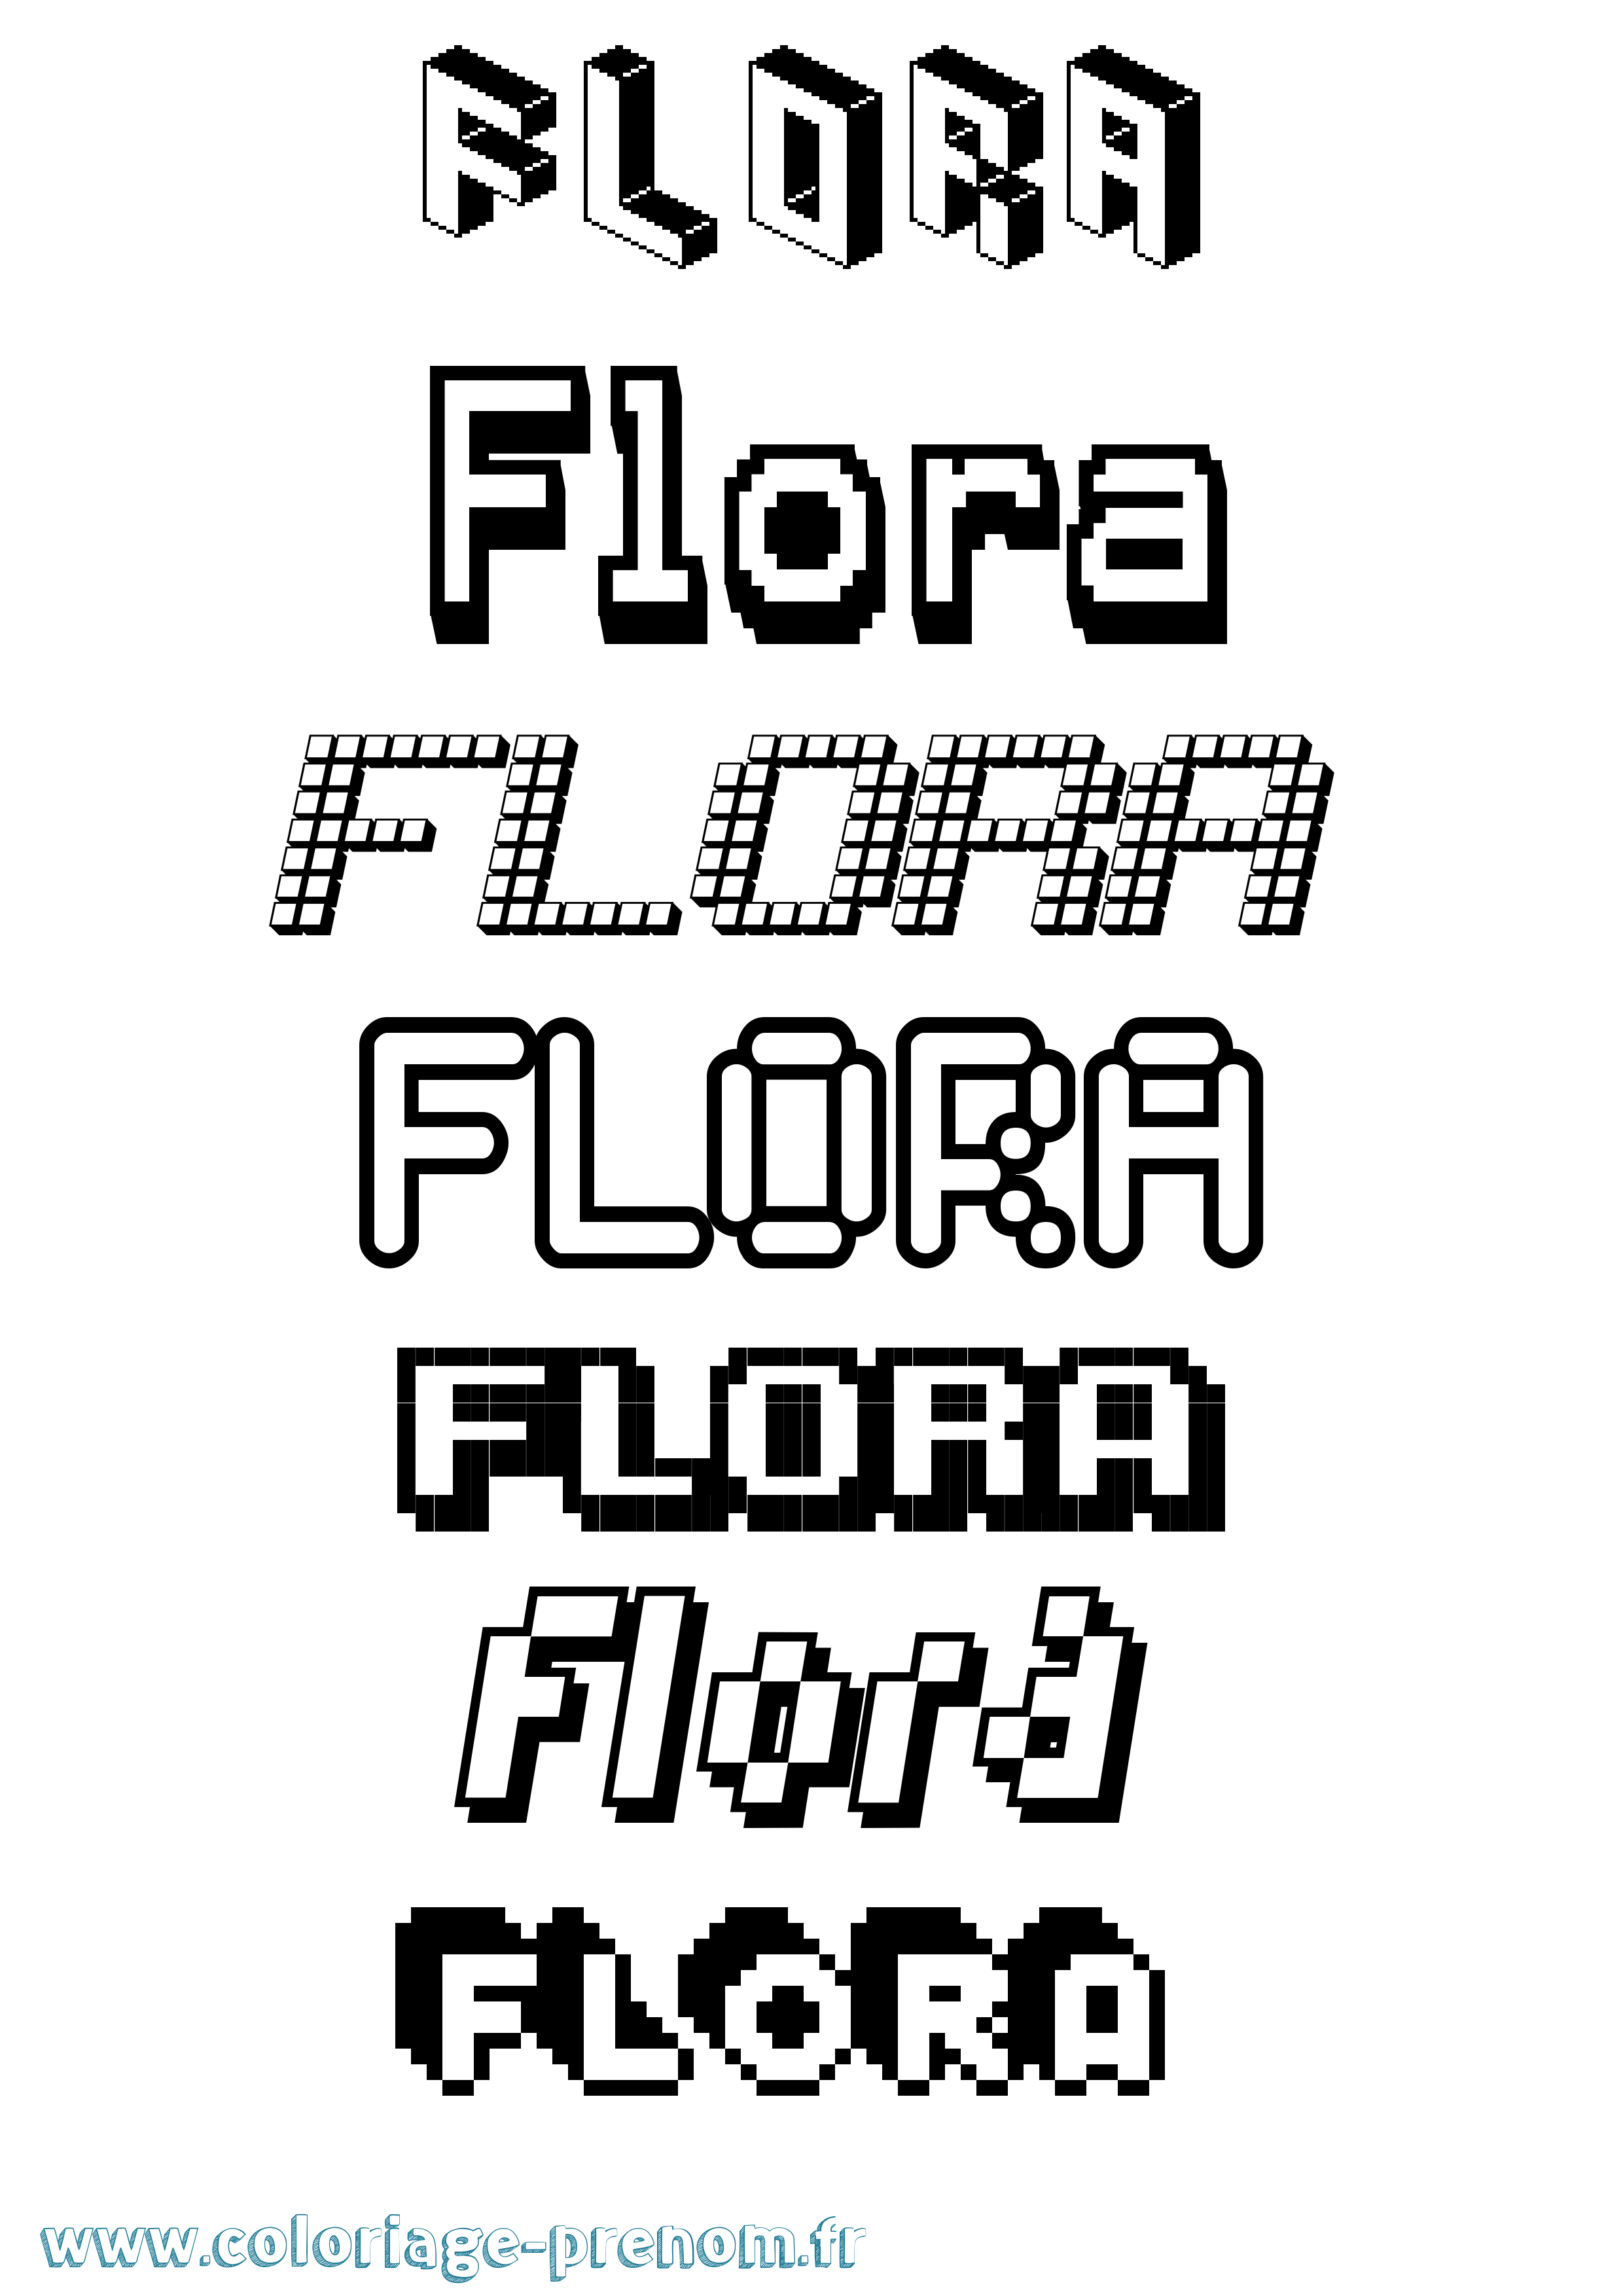 Coloriage prénom Flora Pixel